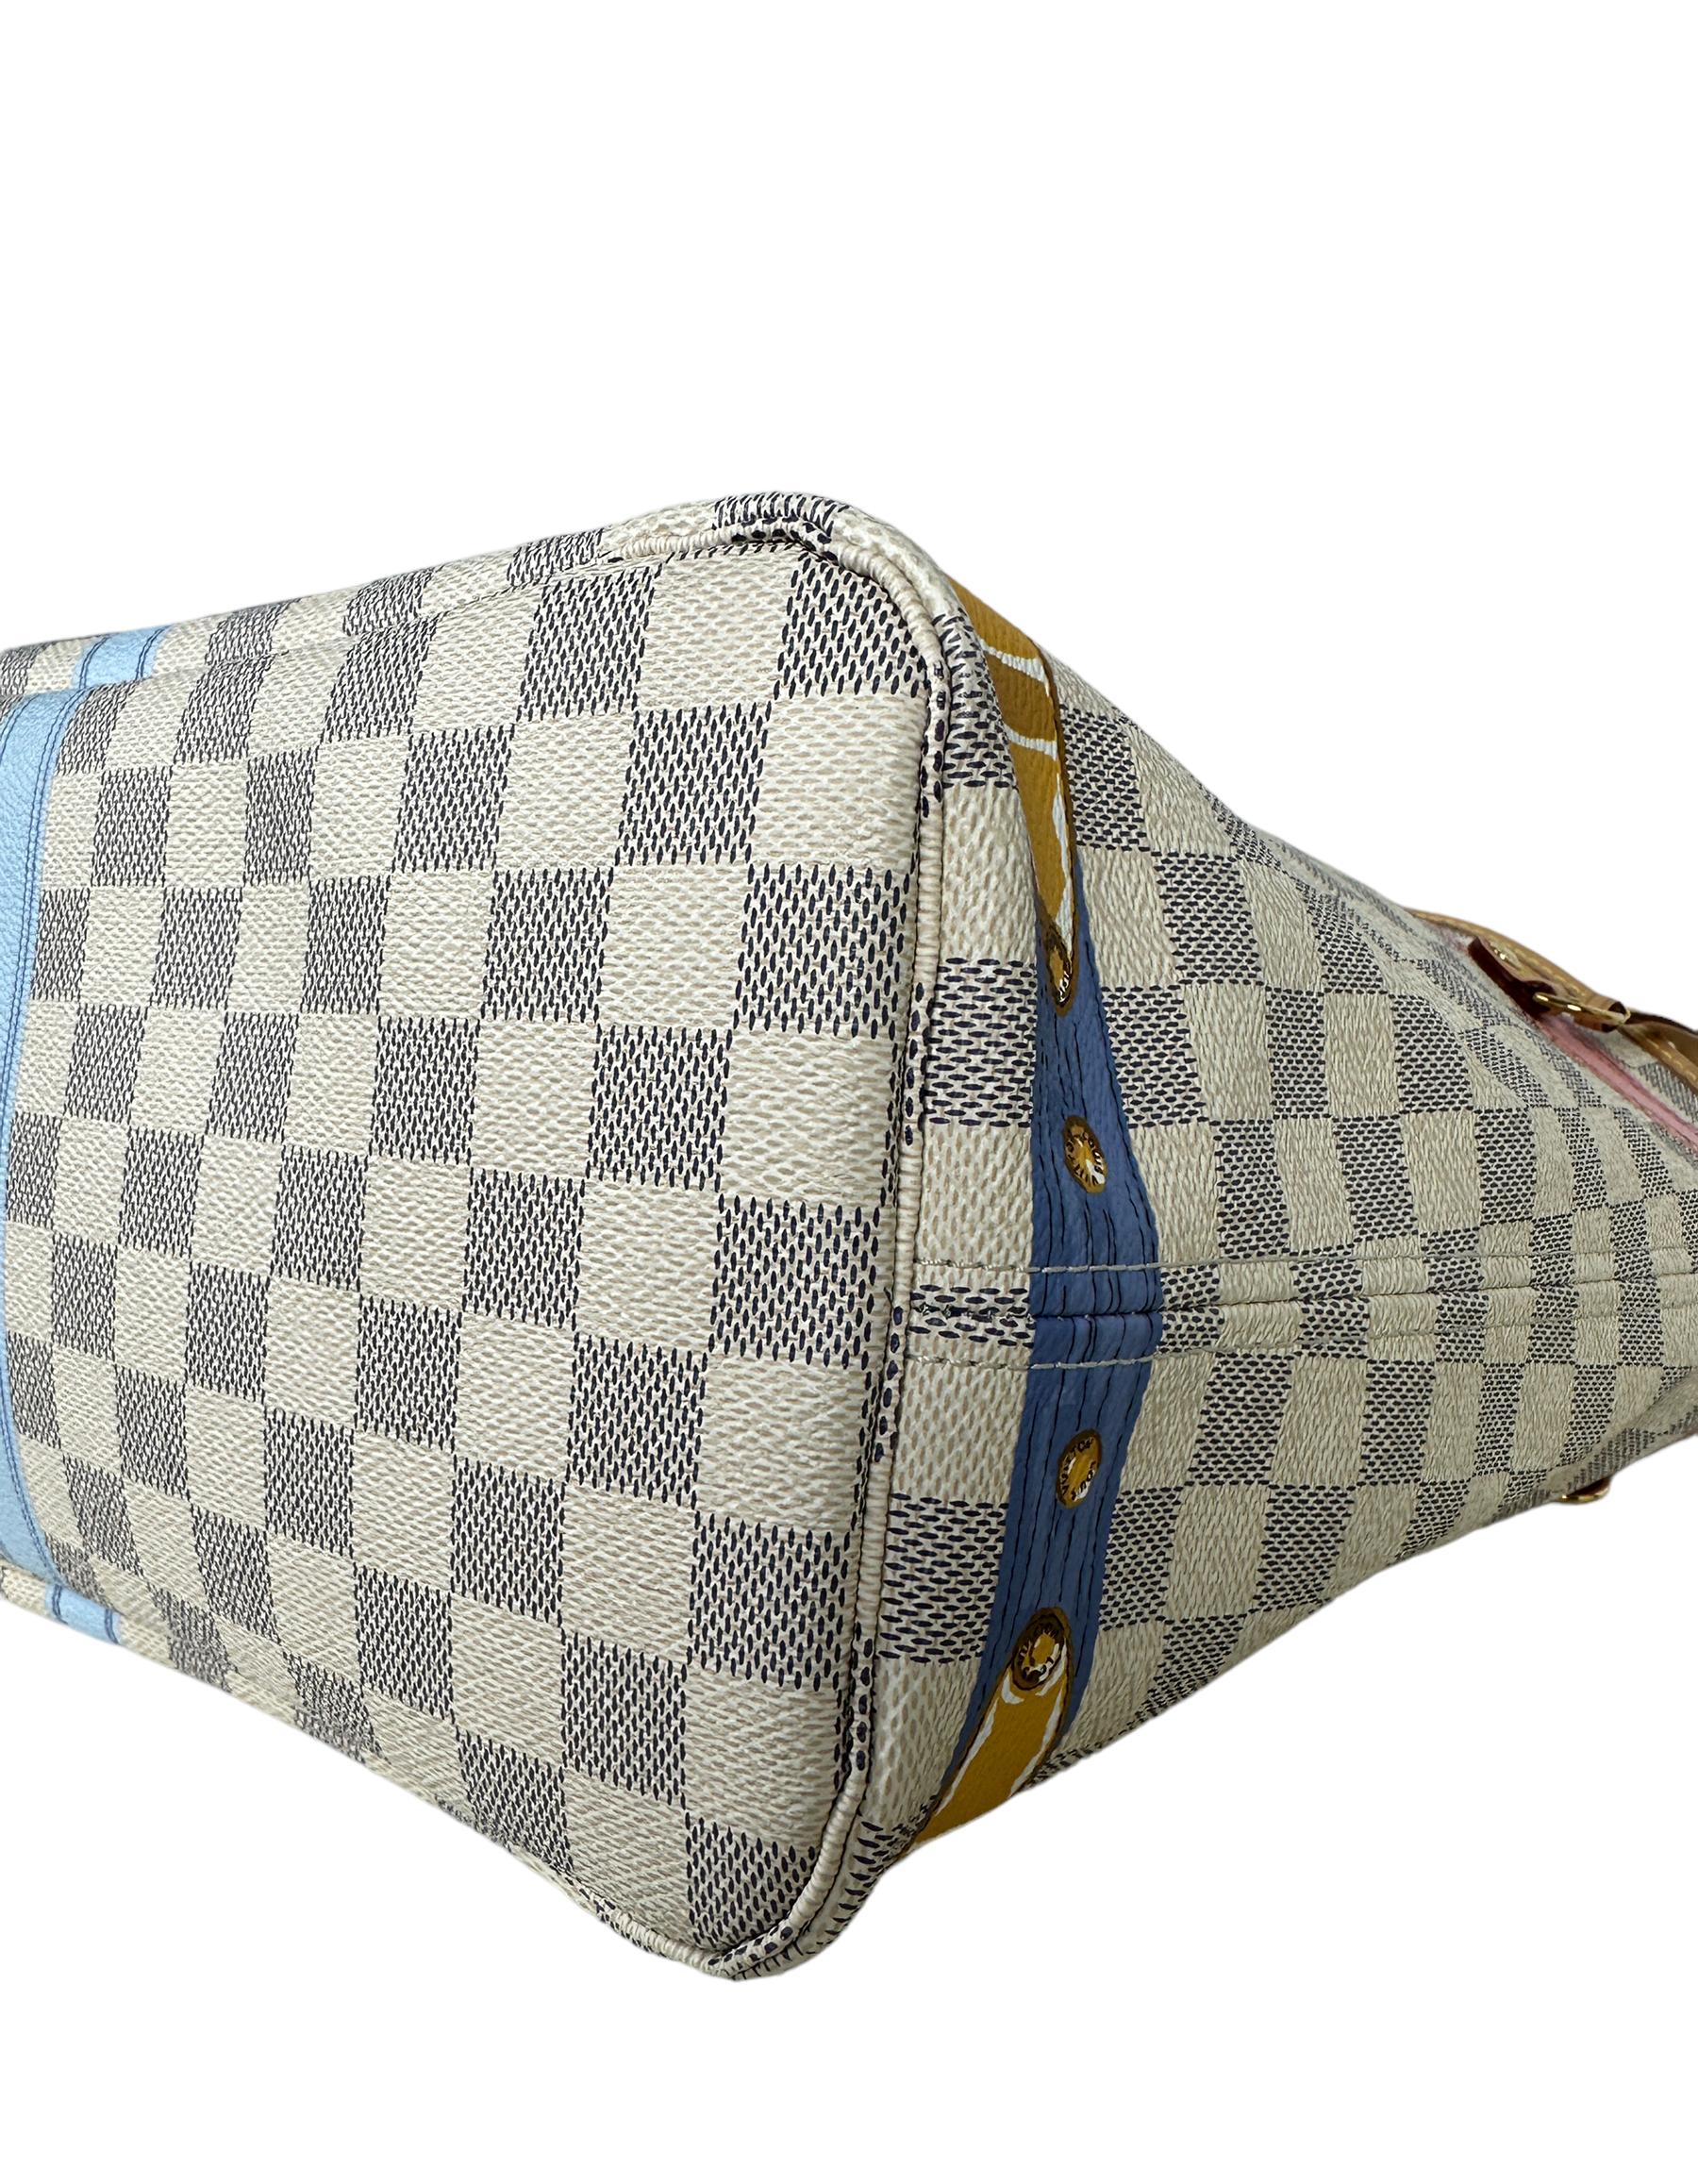 Louis Vuitton Damier Azur Summer Trunks Neverfull MM Tote Bag For Sale 2